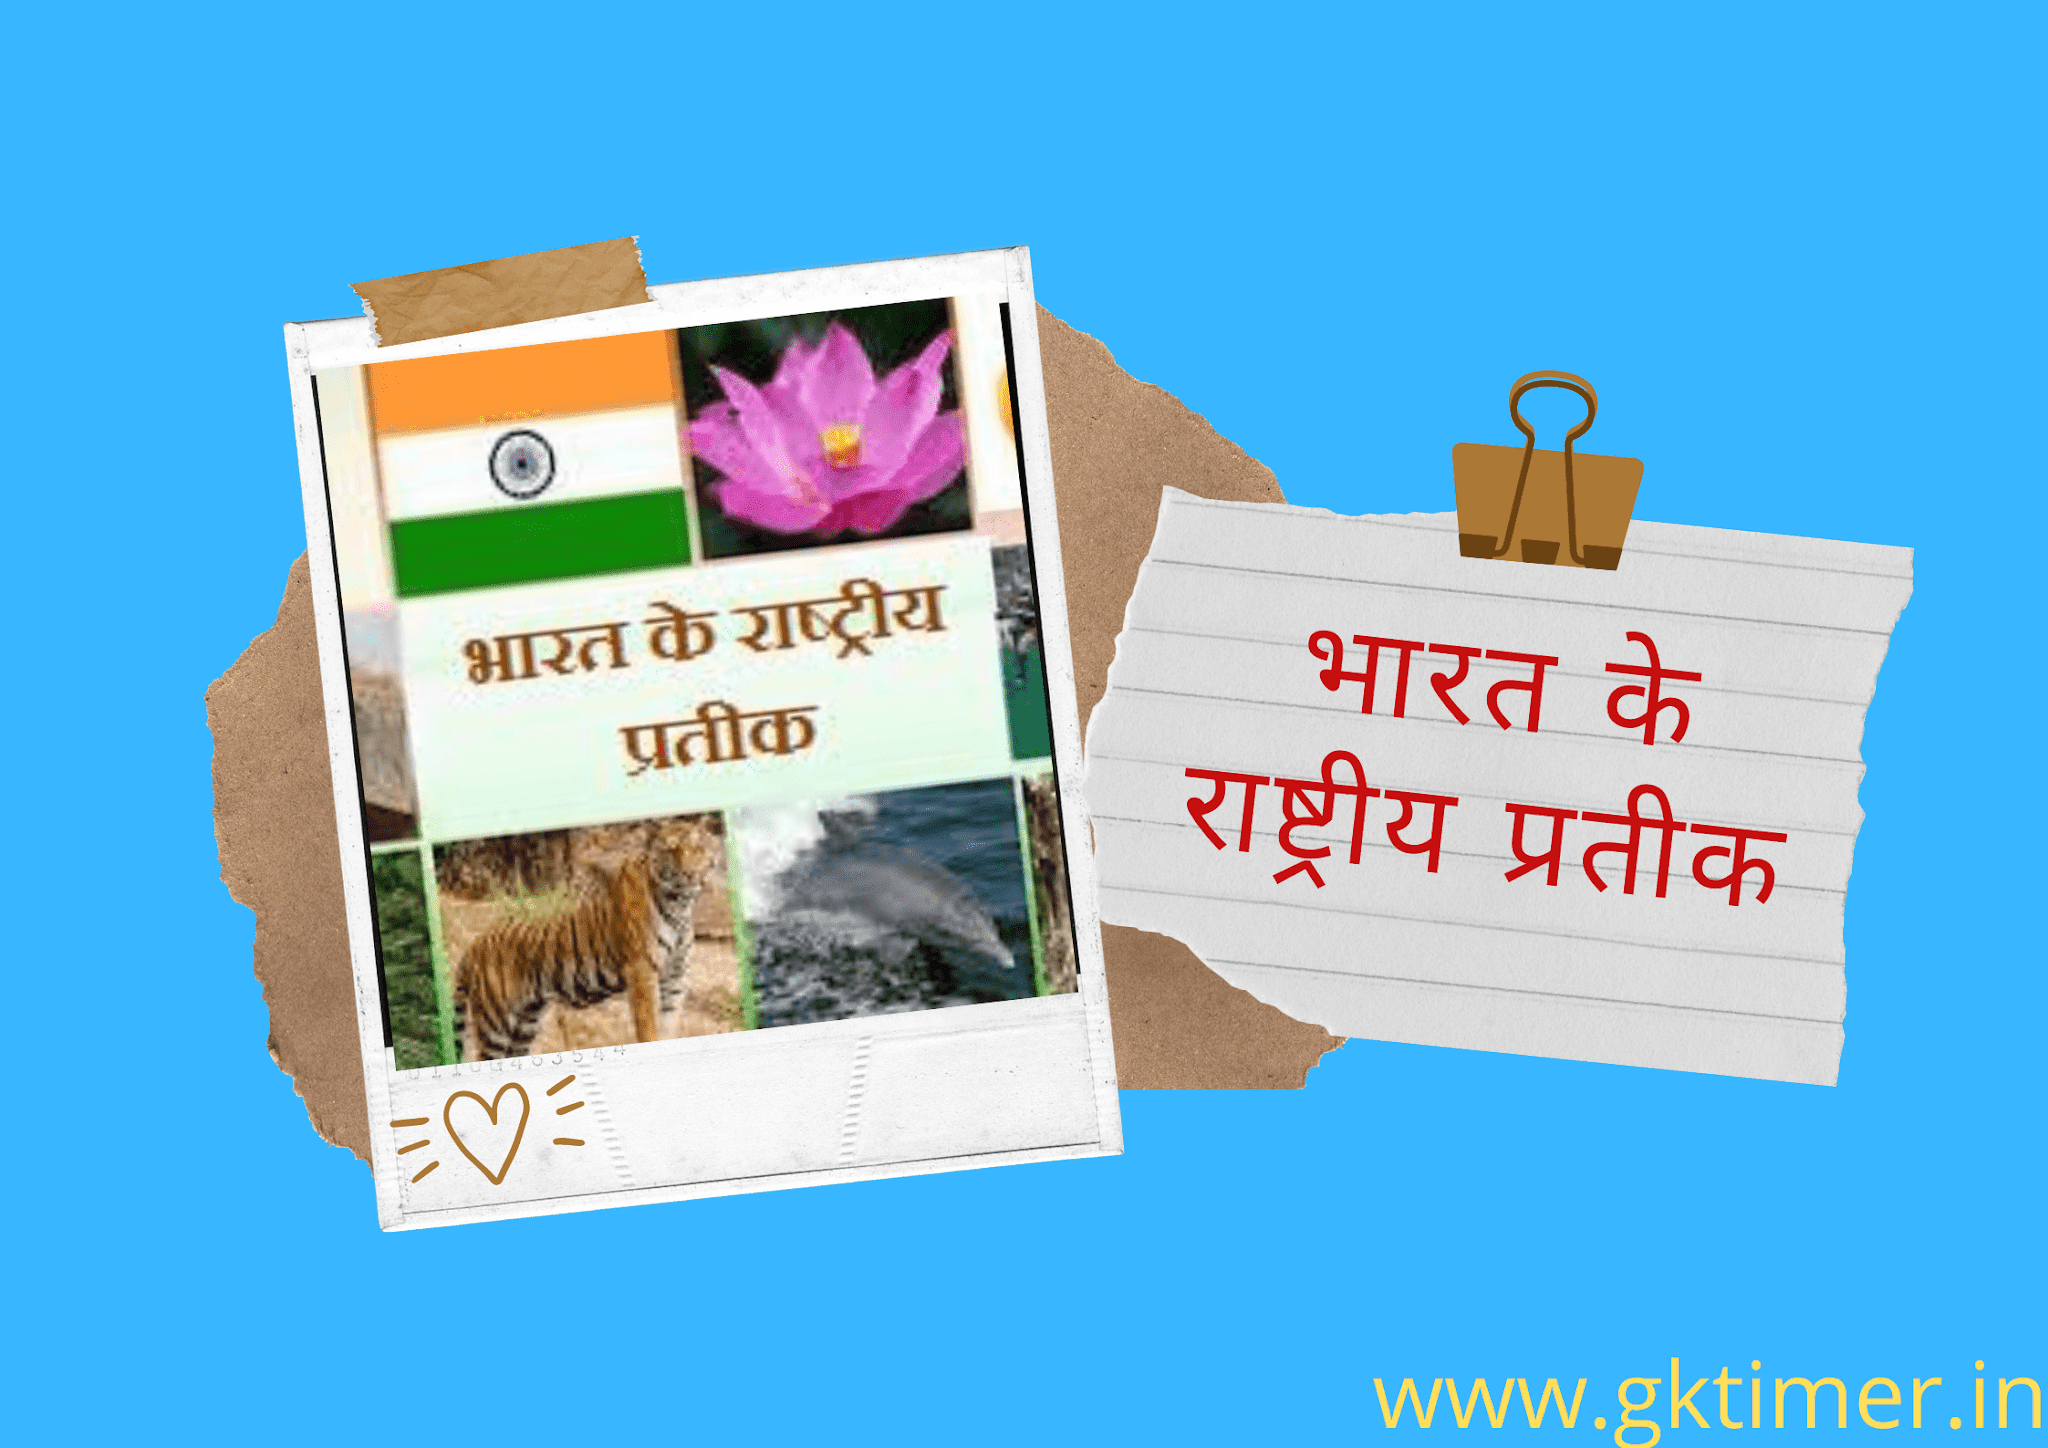 भारत के राष्ट्रीय प्रतीक | National Symbols of India in Hindi